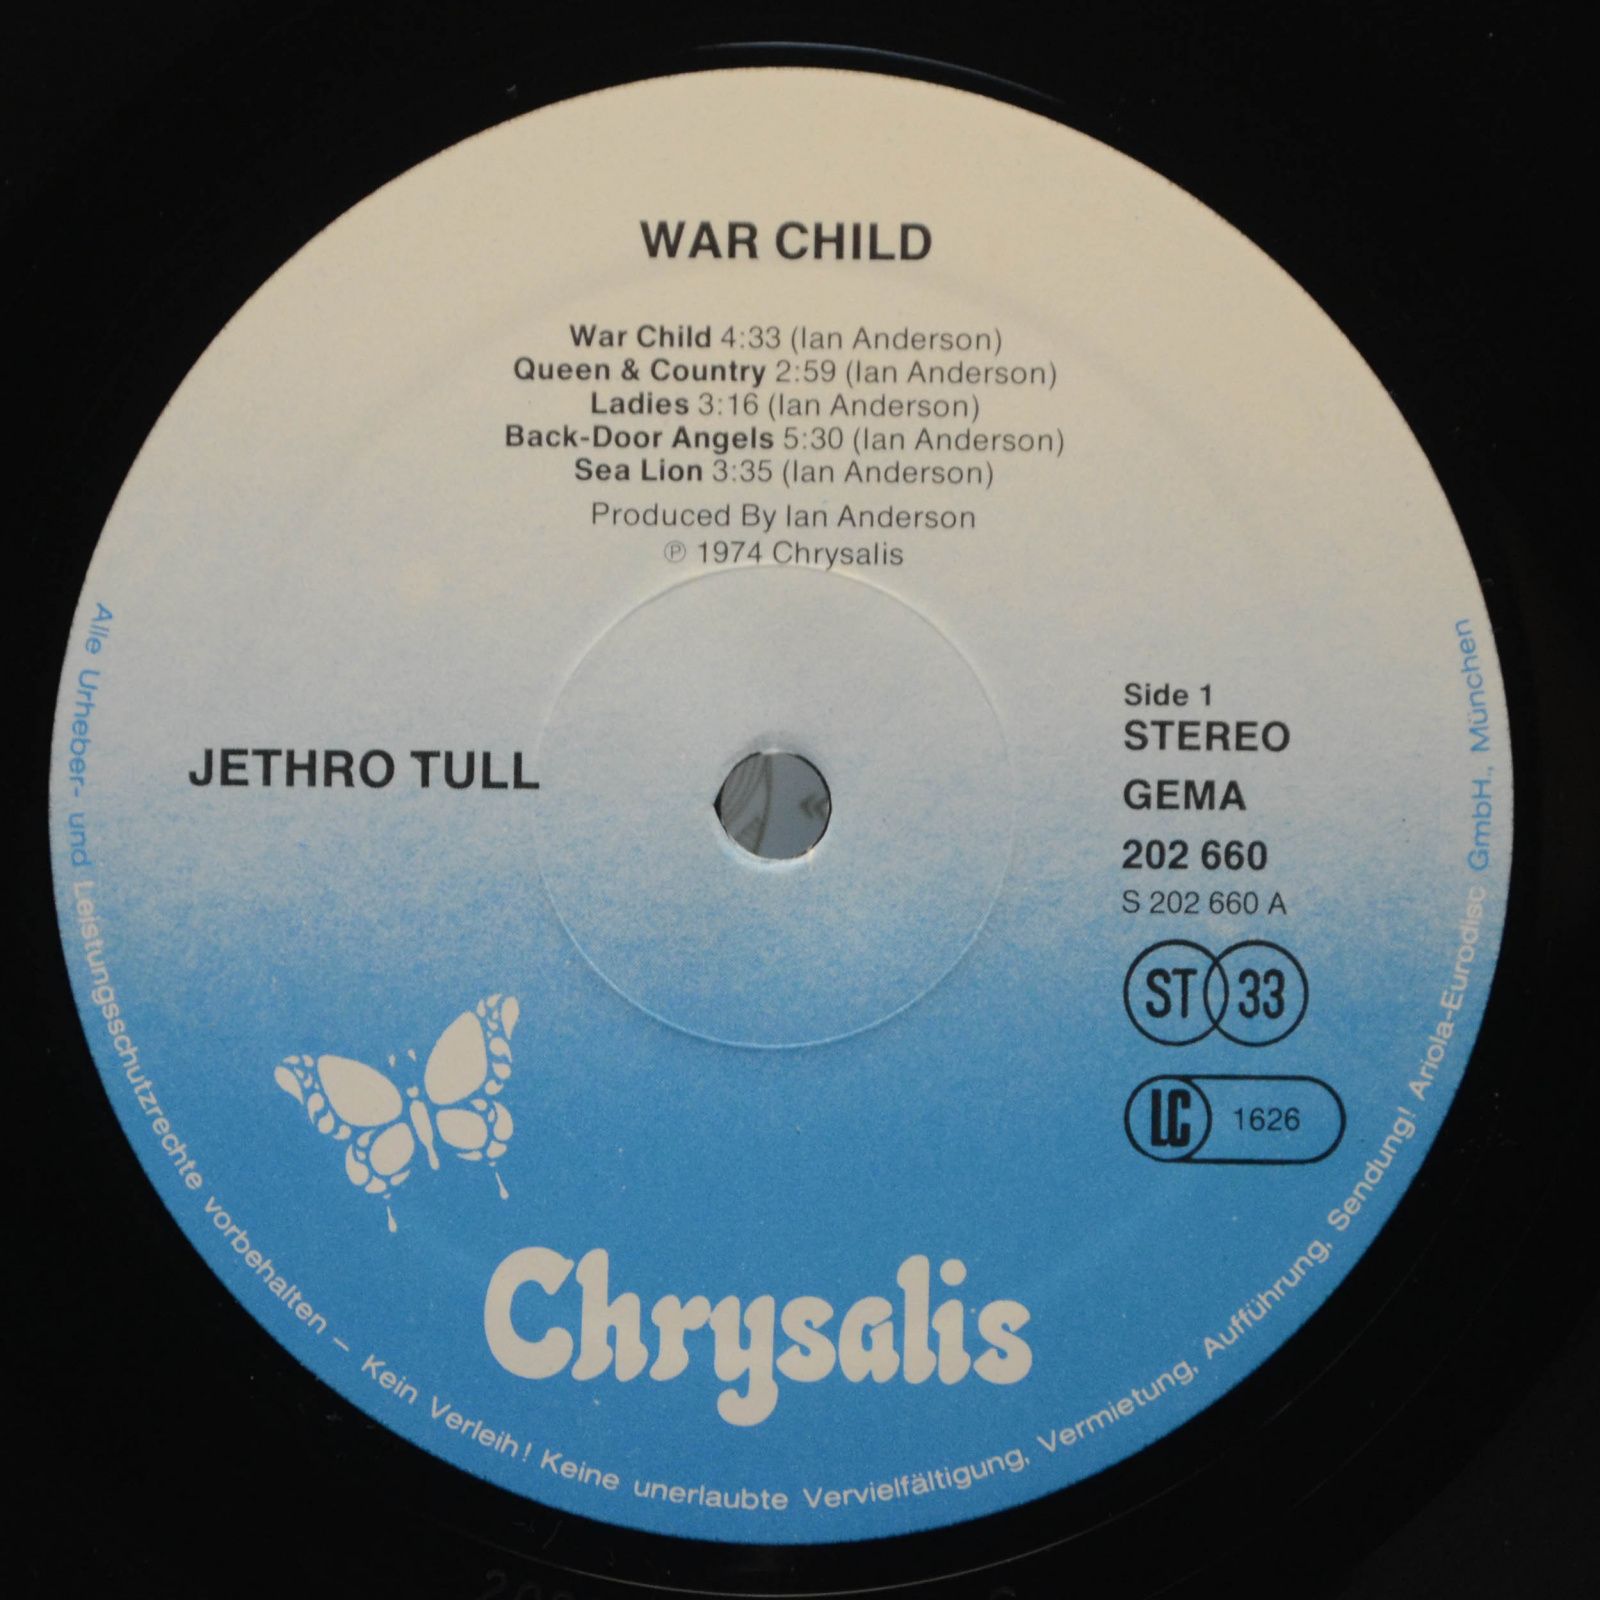 Jethro Tull — War Child, 1974